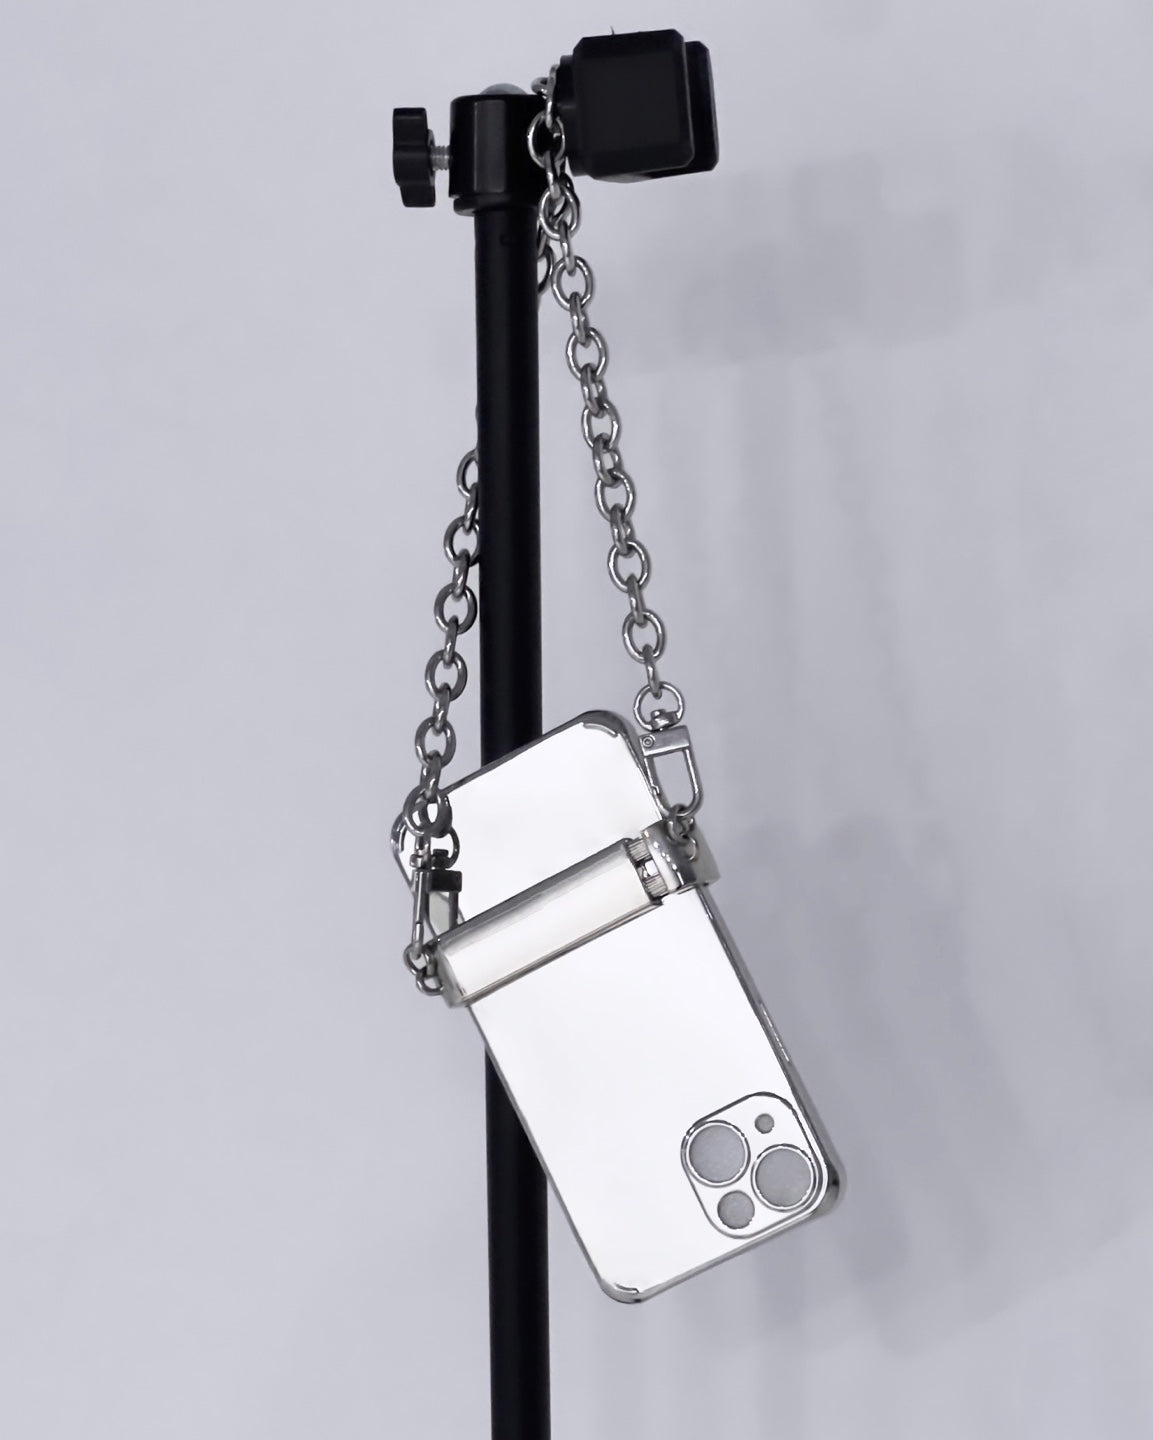 Phone holder chain